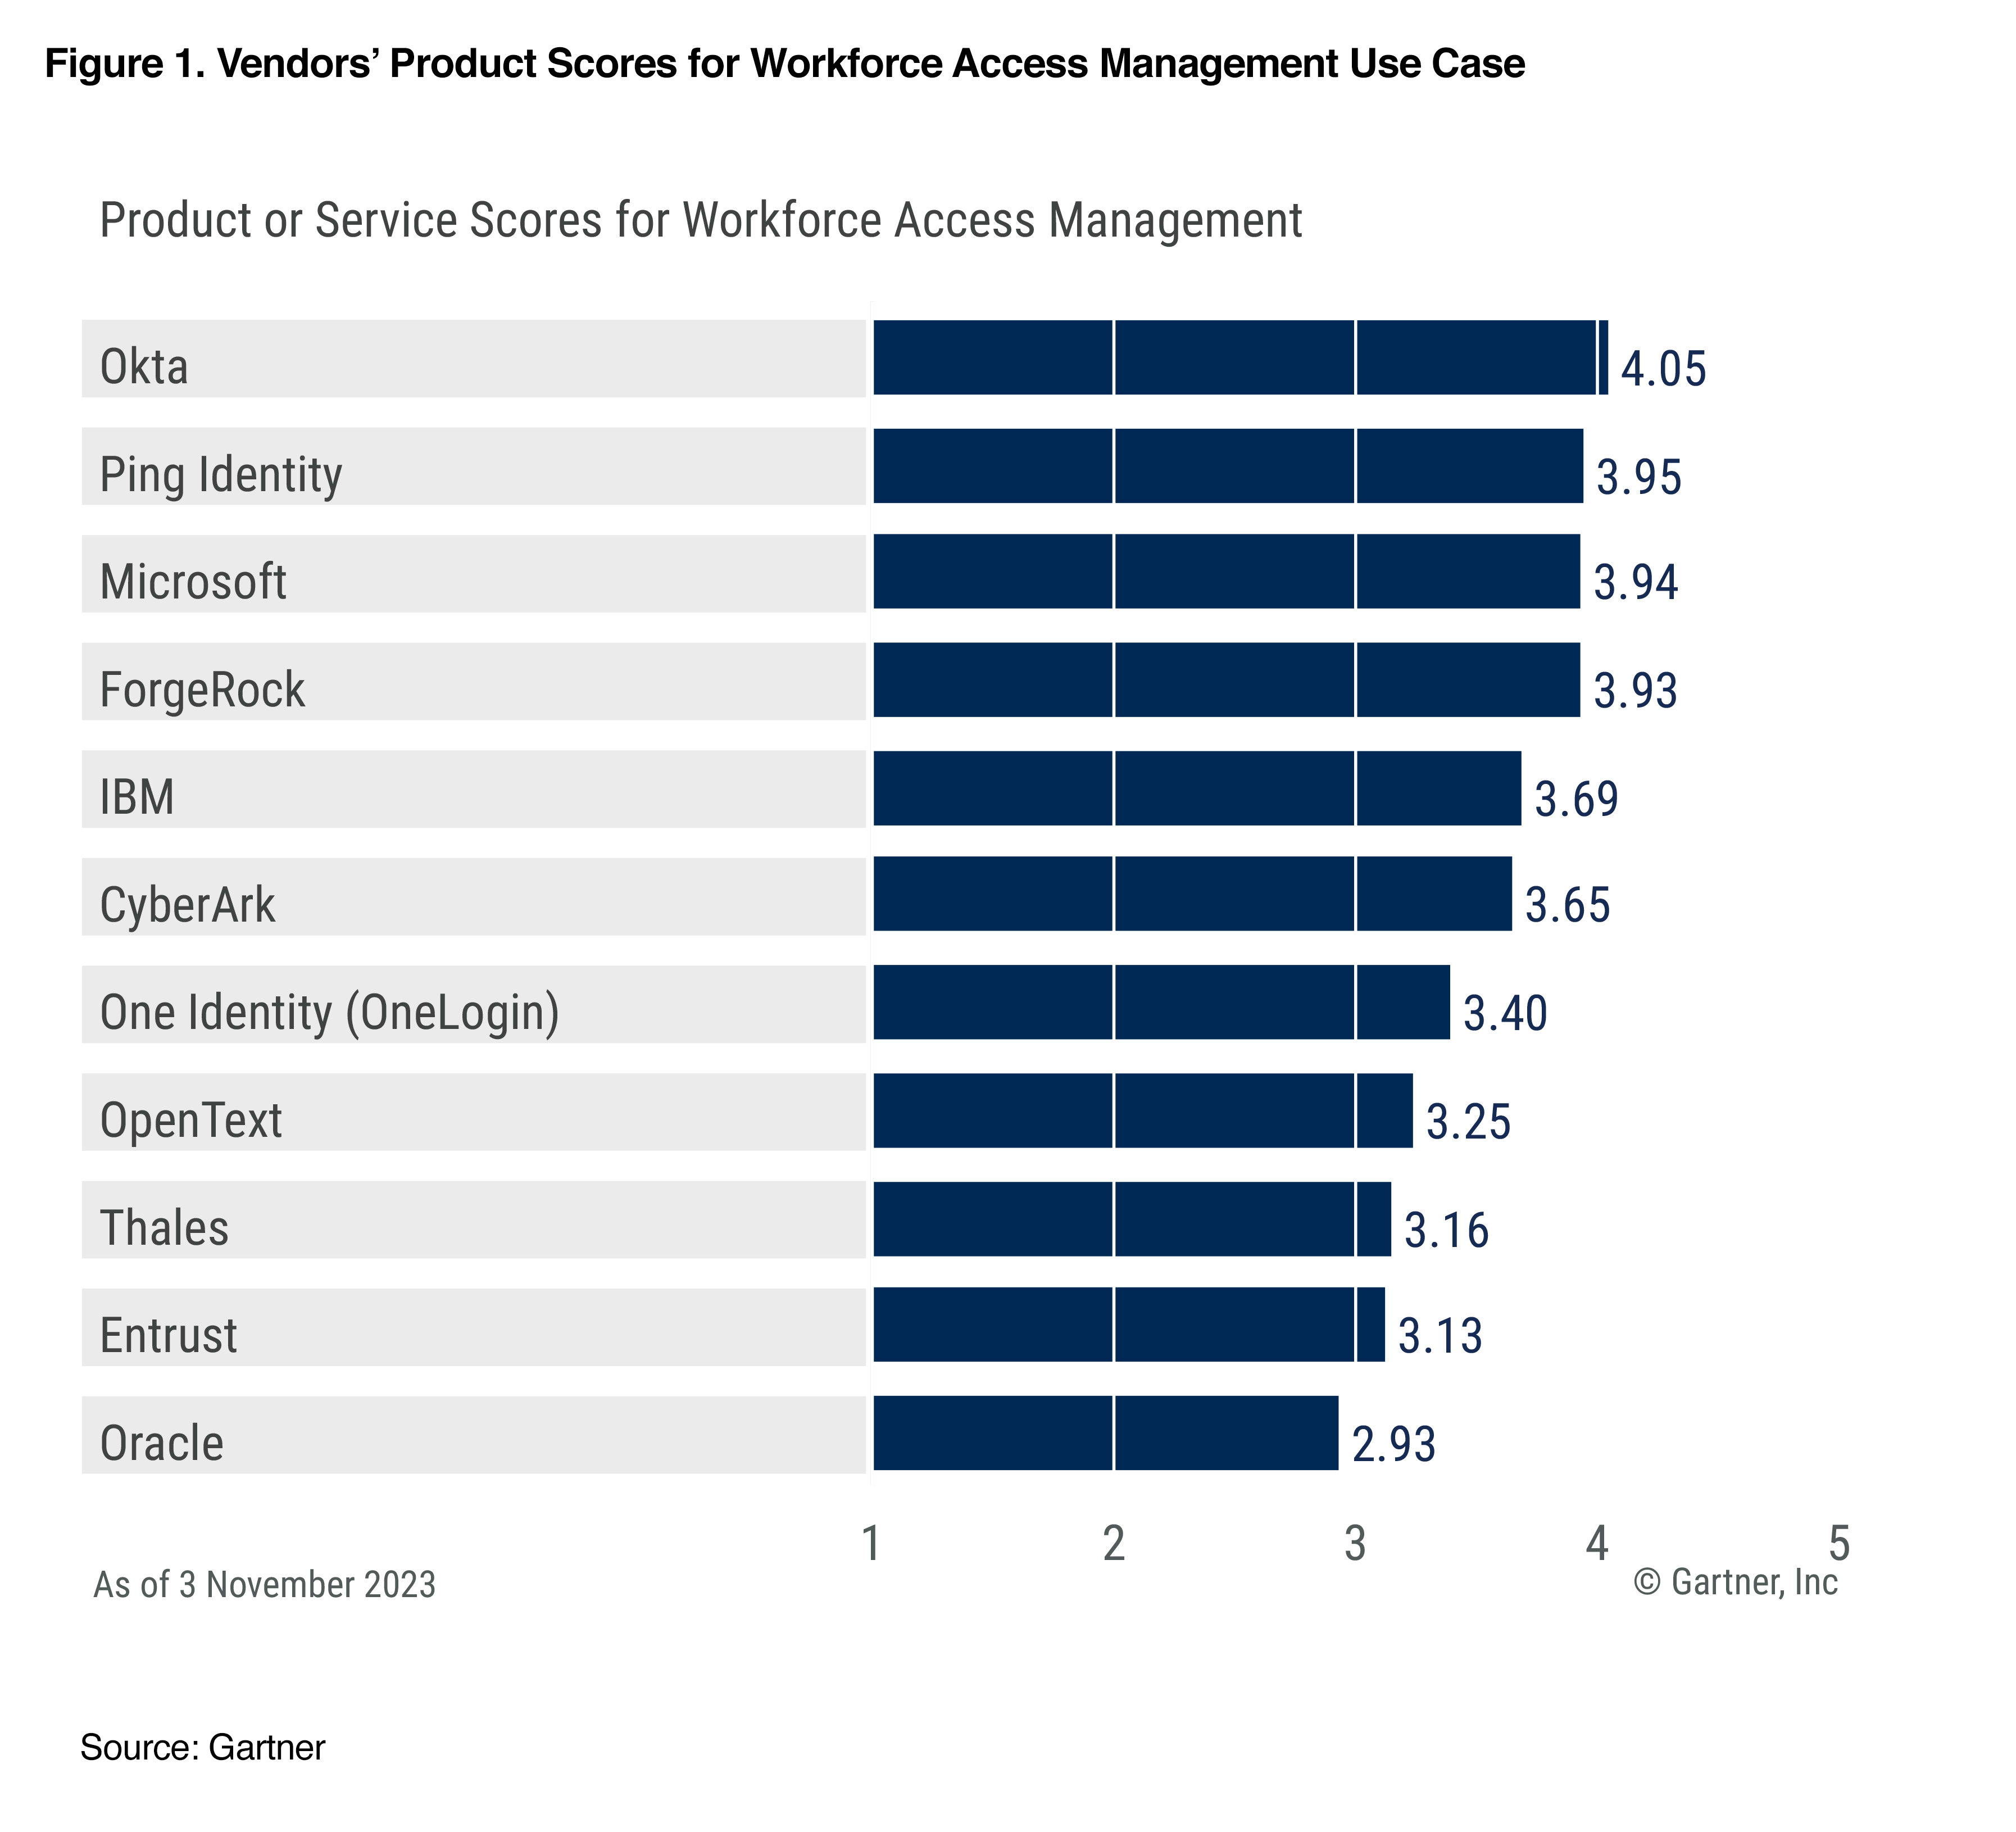 Vendors’ Product Scores for Workforce Access Management Use Case bar graph